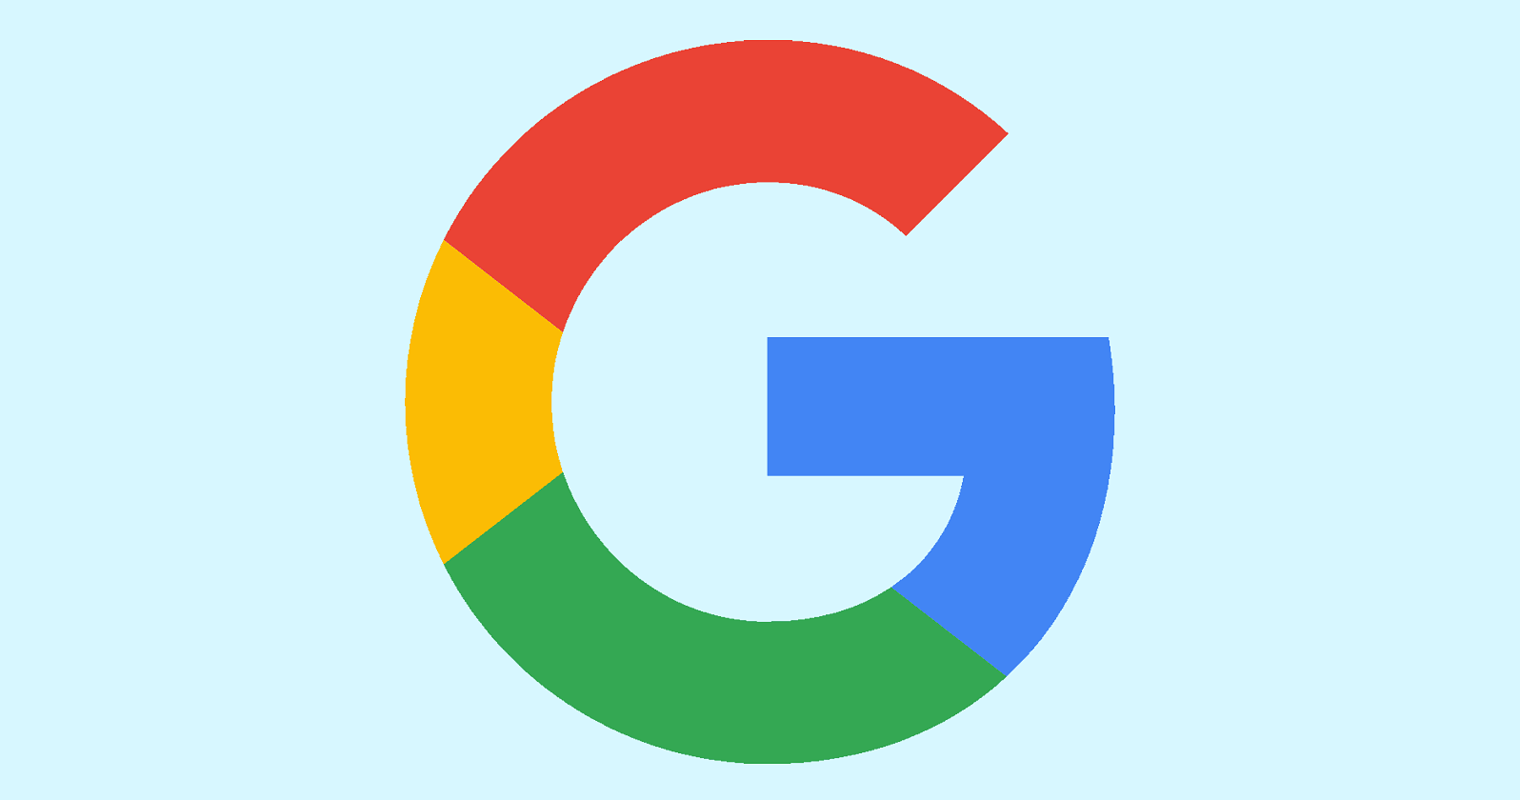 Google’s New Head of Search – Prabhakar Raghavan